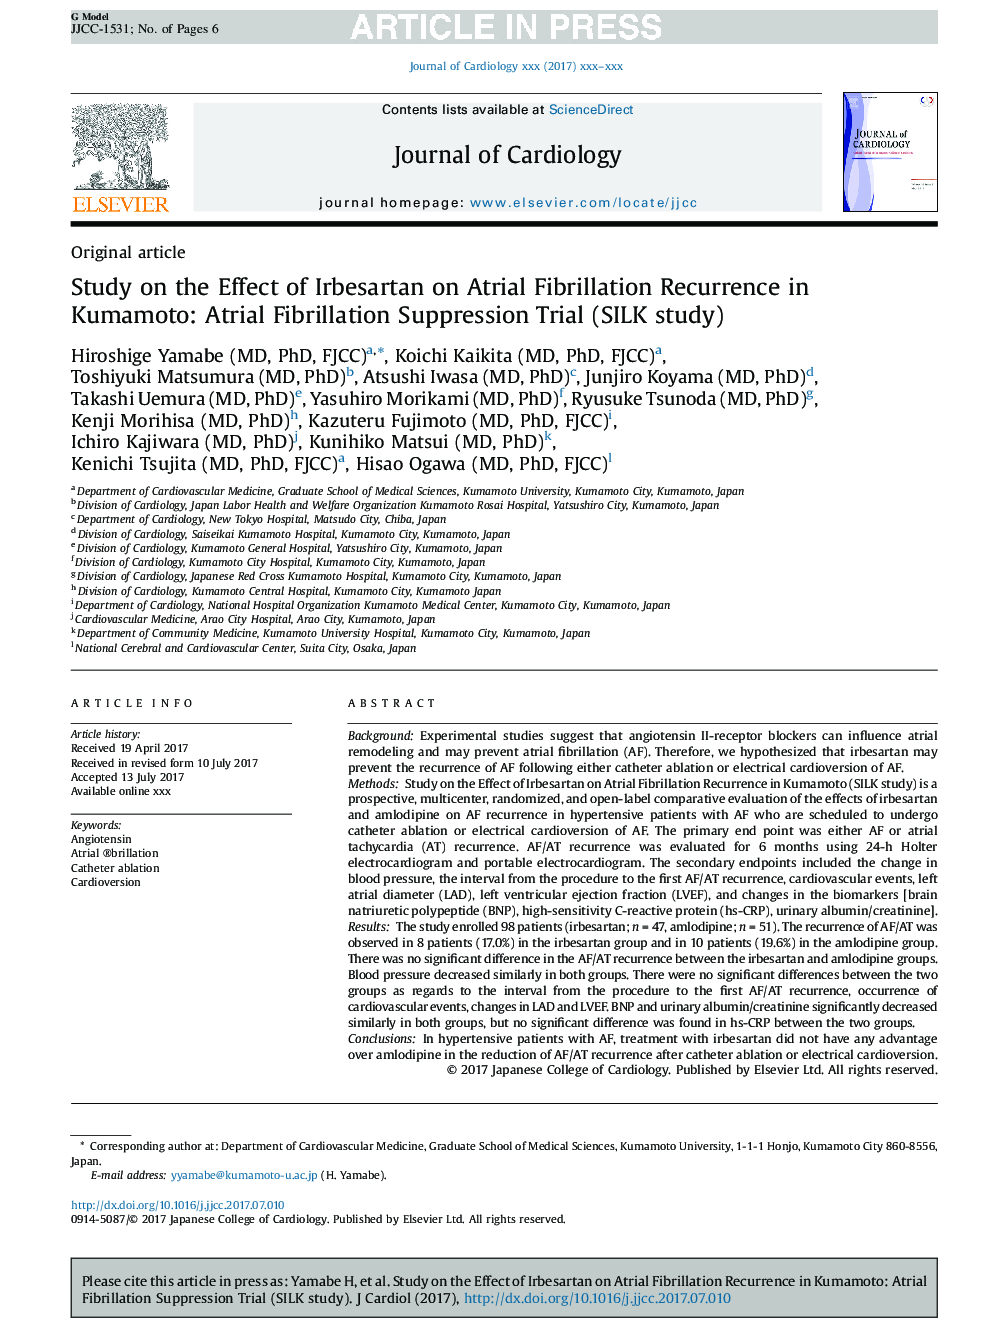 Study on the Effect of Irbesartan on Atrial Fibrillation Recurrence in Kumamoto: Atrial Fibrillation Suppression Trial (SILK study)